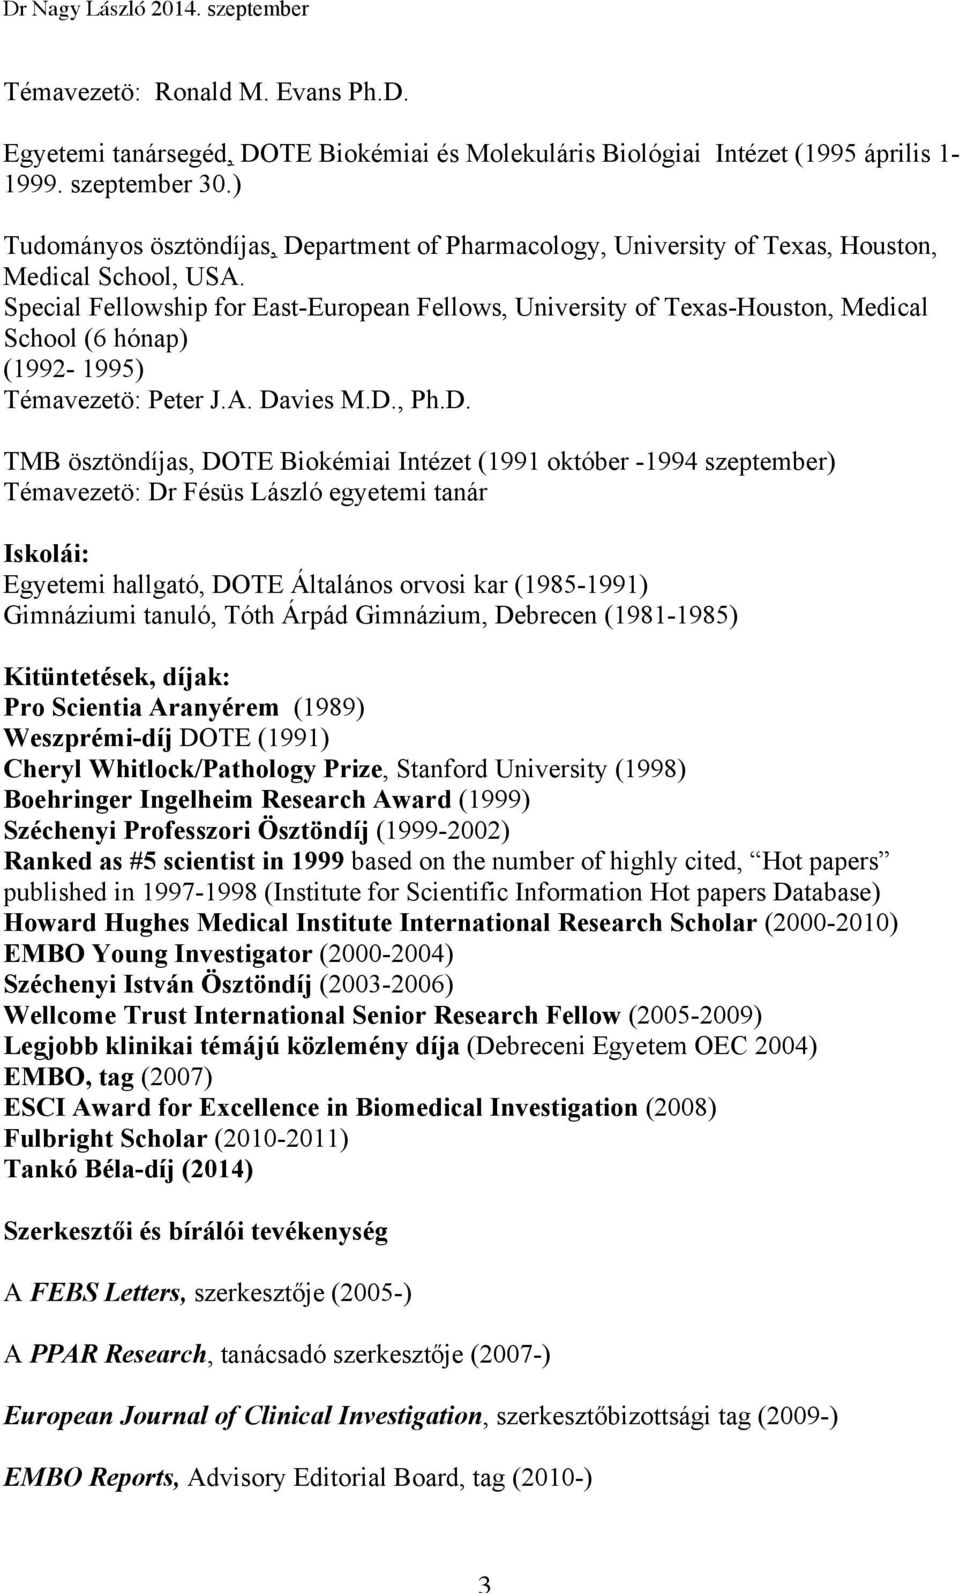 Special Fellowship for East-European Fellows, University of Texas-Houston, Medical School (6 hónap) (1992-1995) Témavezetö: Peter J.A. Da